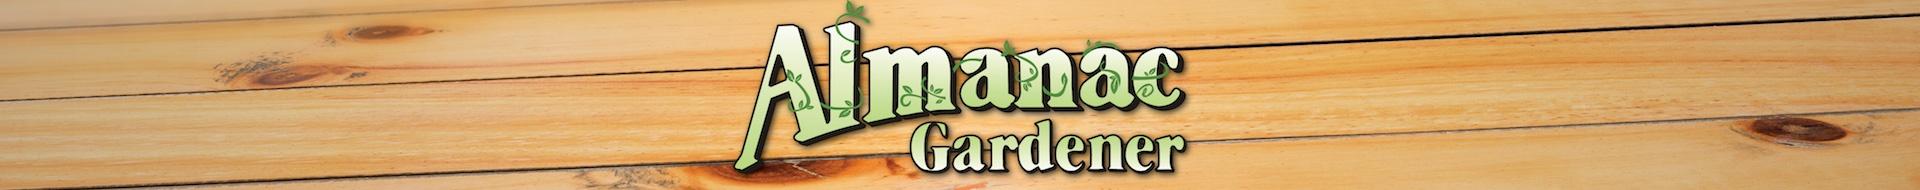 Almanac Gardner Logo Banner